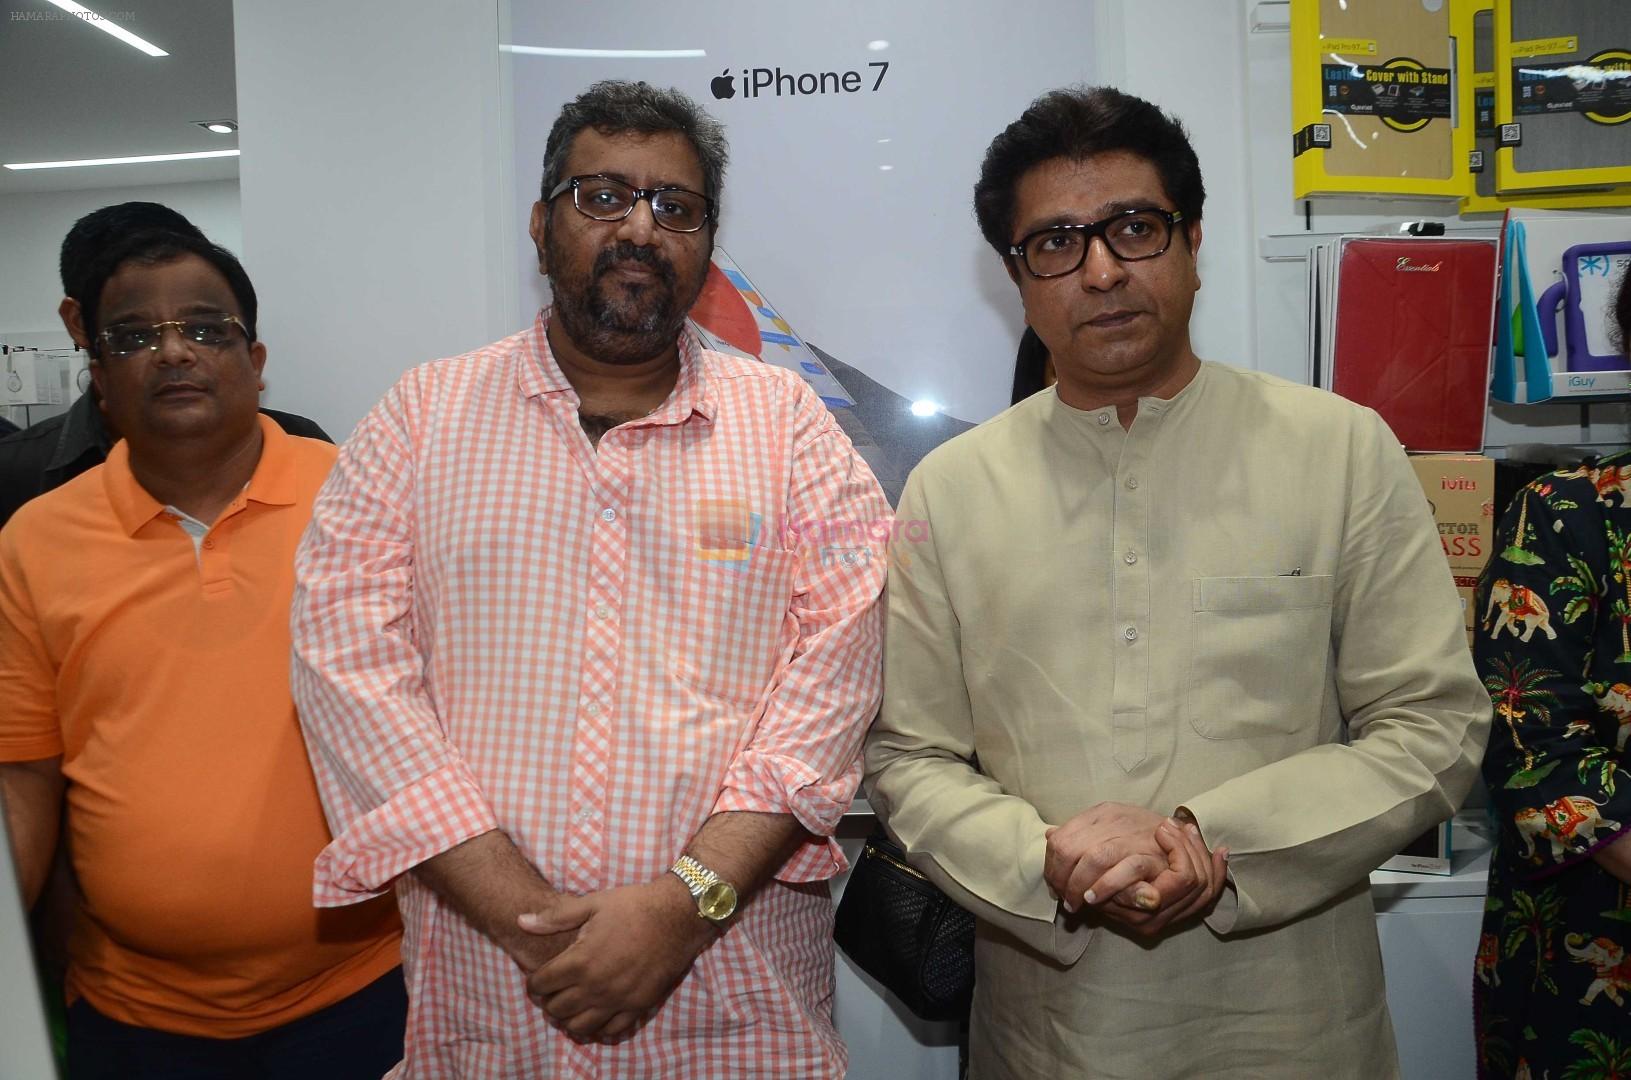 Raj Thackeray at the Launch OF Zanai Bhosle's iAzure, Apple Store on 30th July 2017